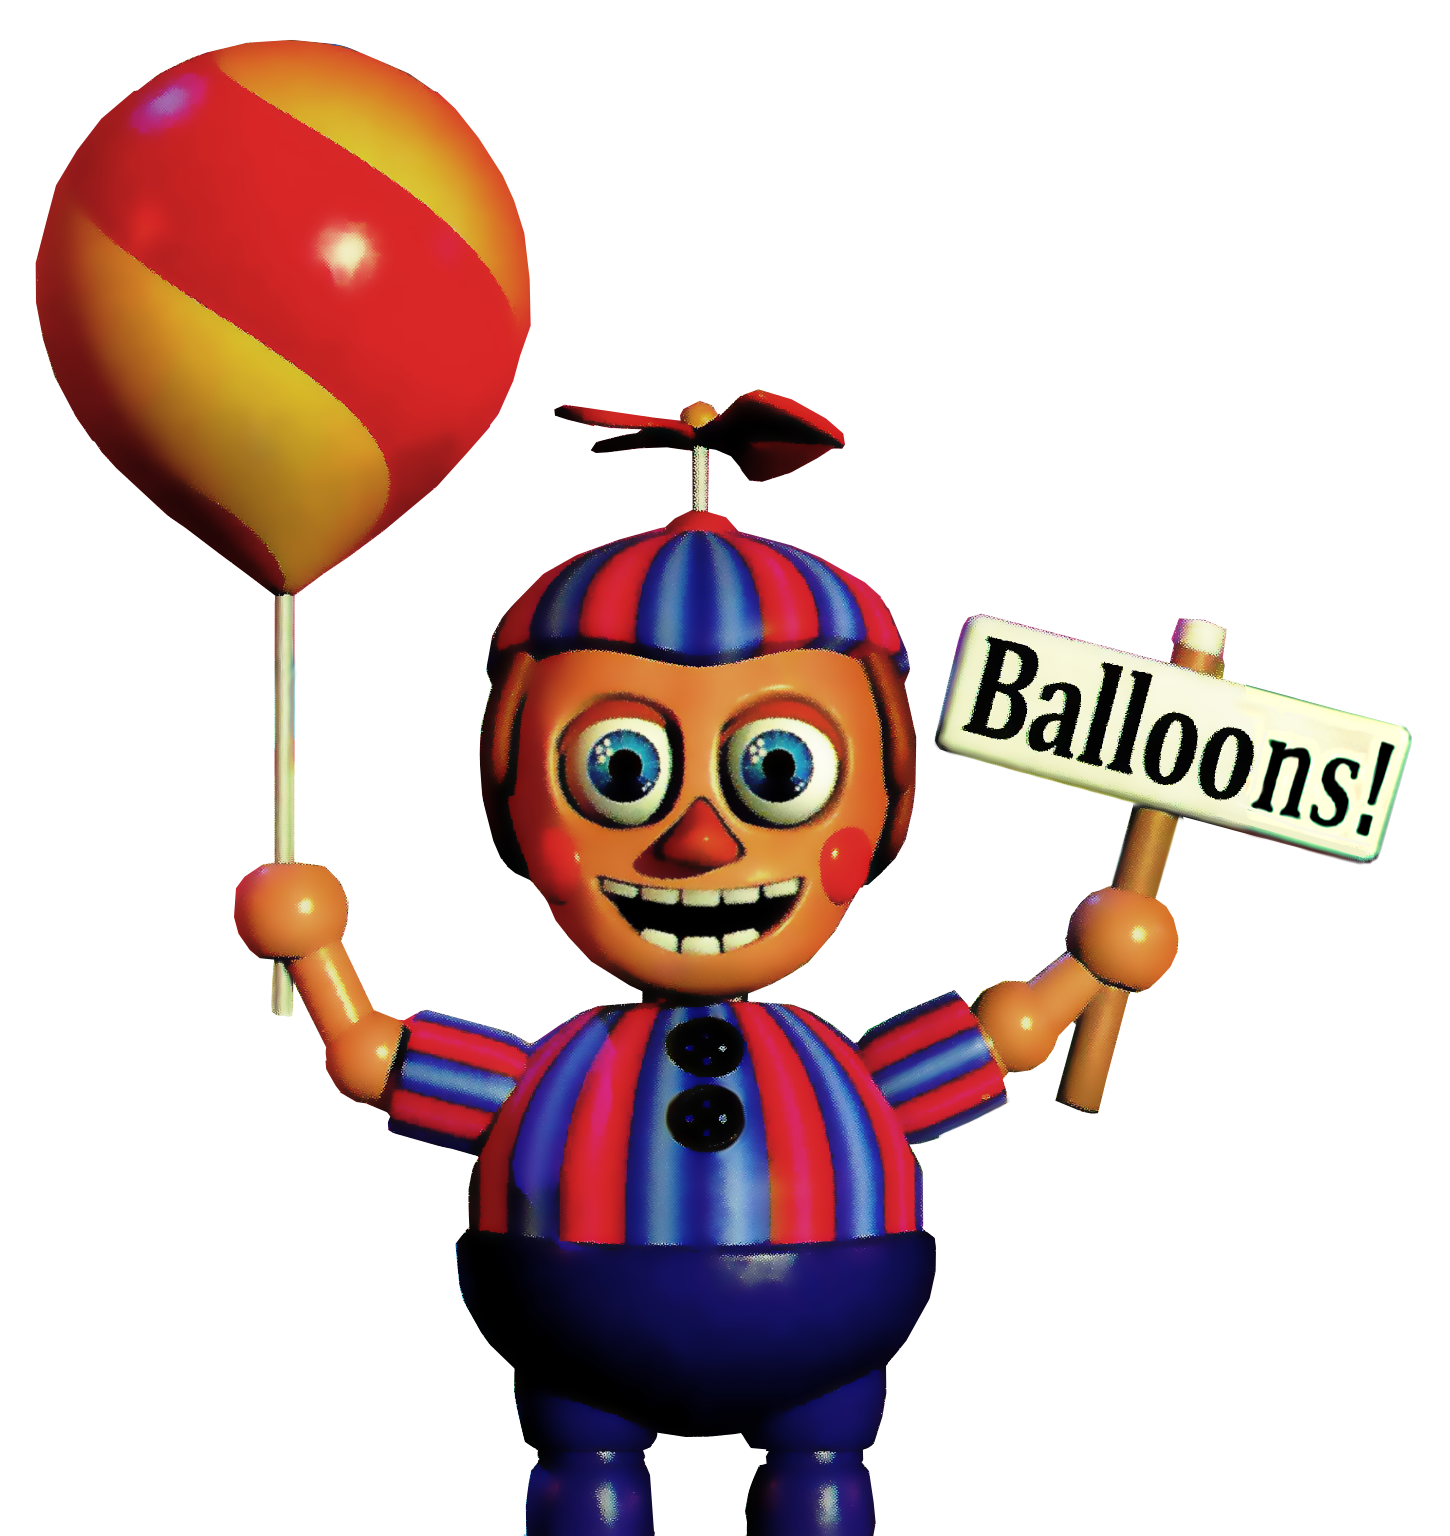 Fnaf balloons. Балун бой из ФНАФ. ФНАФ 2 балун бой. FNAF балун бой. ББ балун бой.